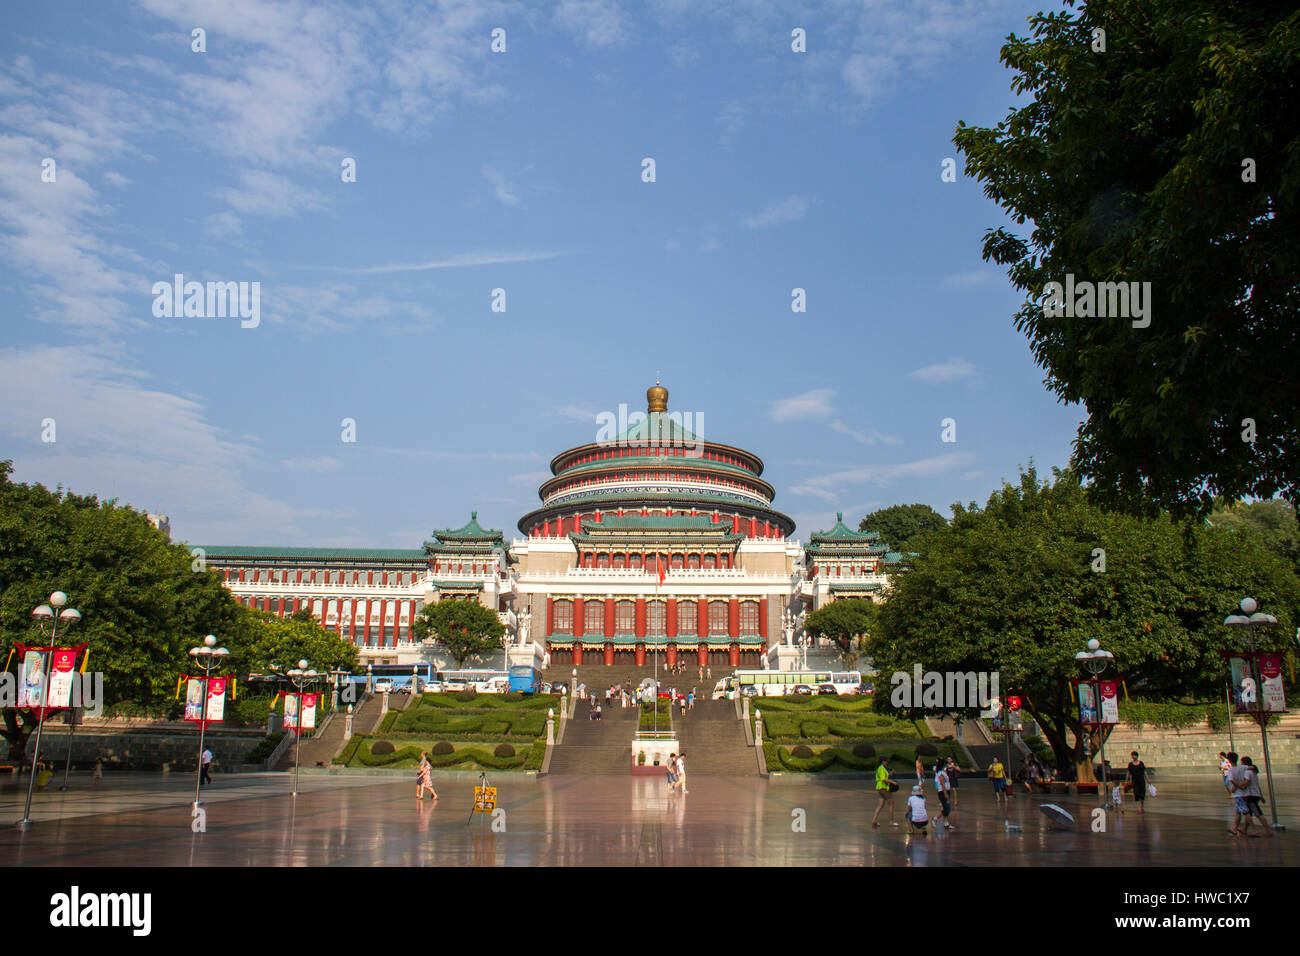 Grande salle, Chongqing Chongqing, Place du Peuple, Chine Banque D'Images